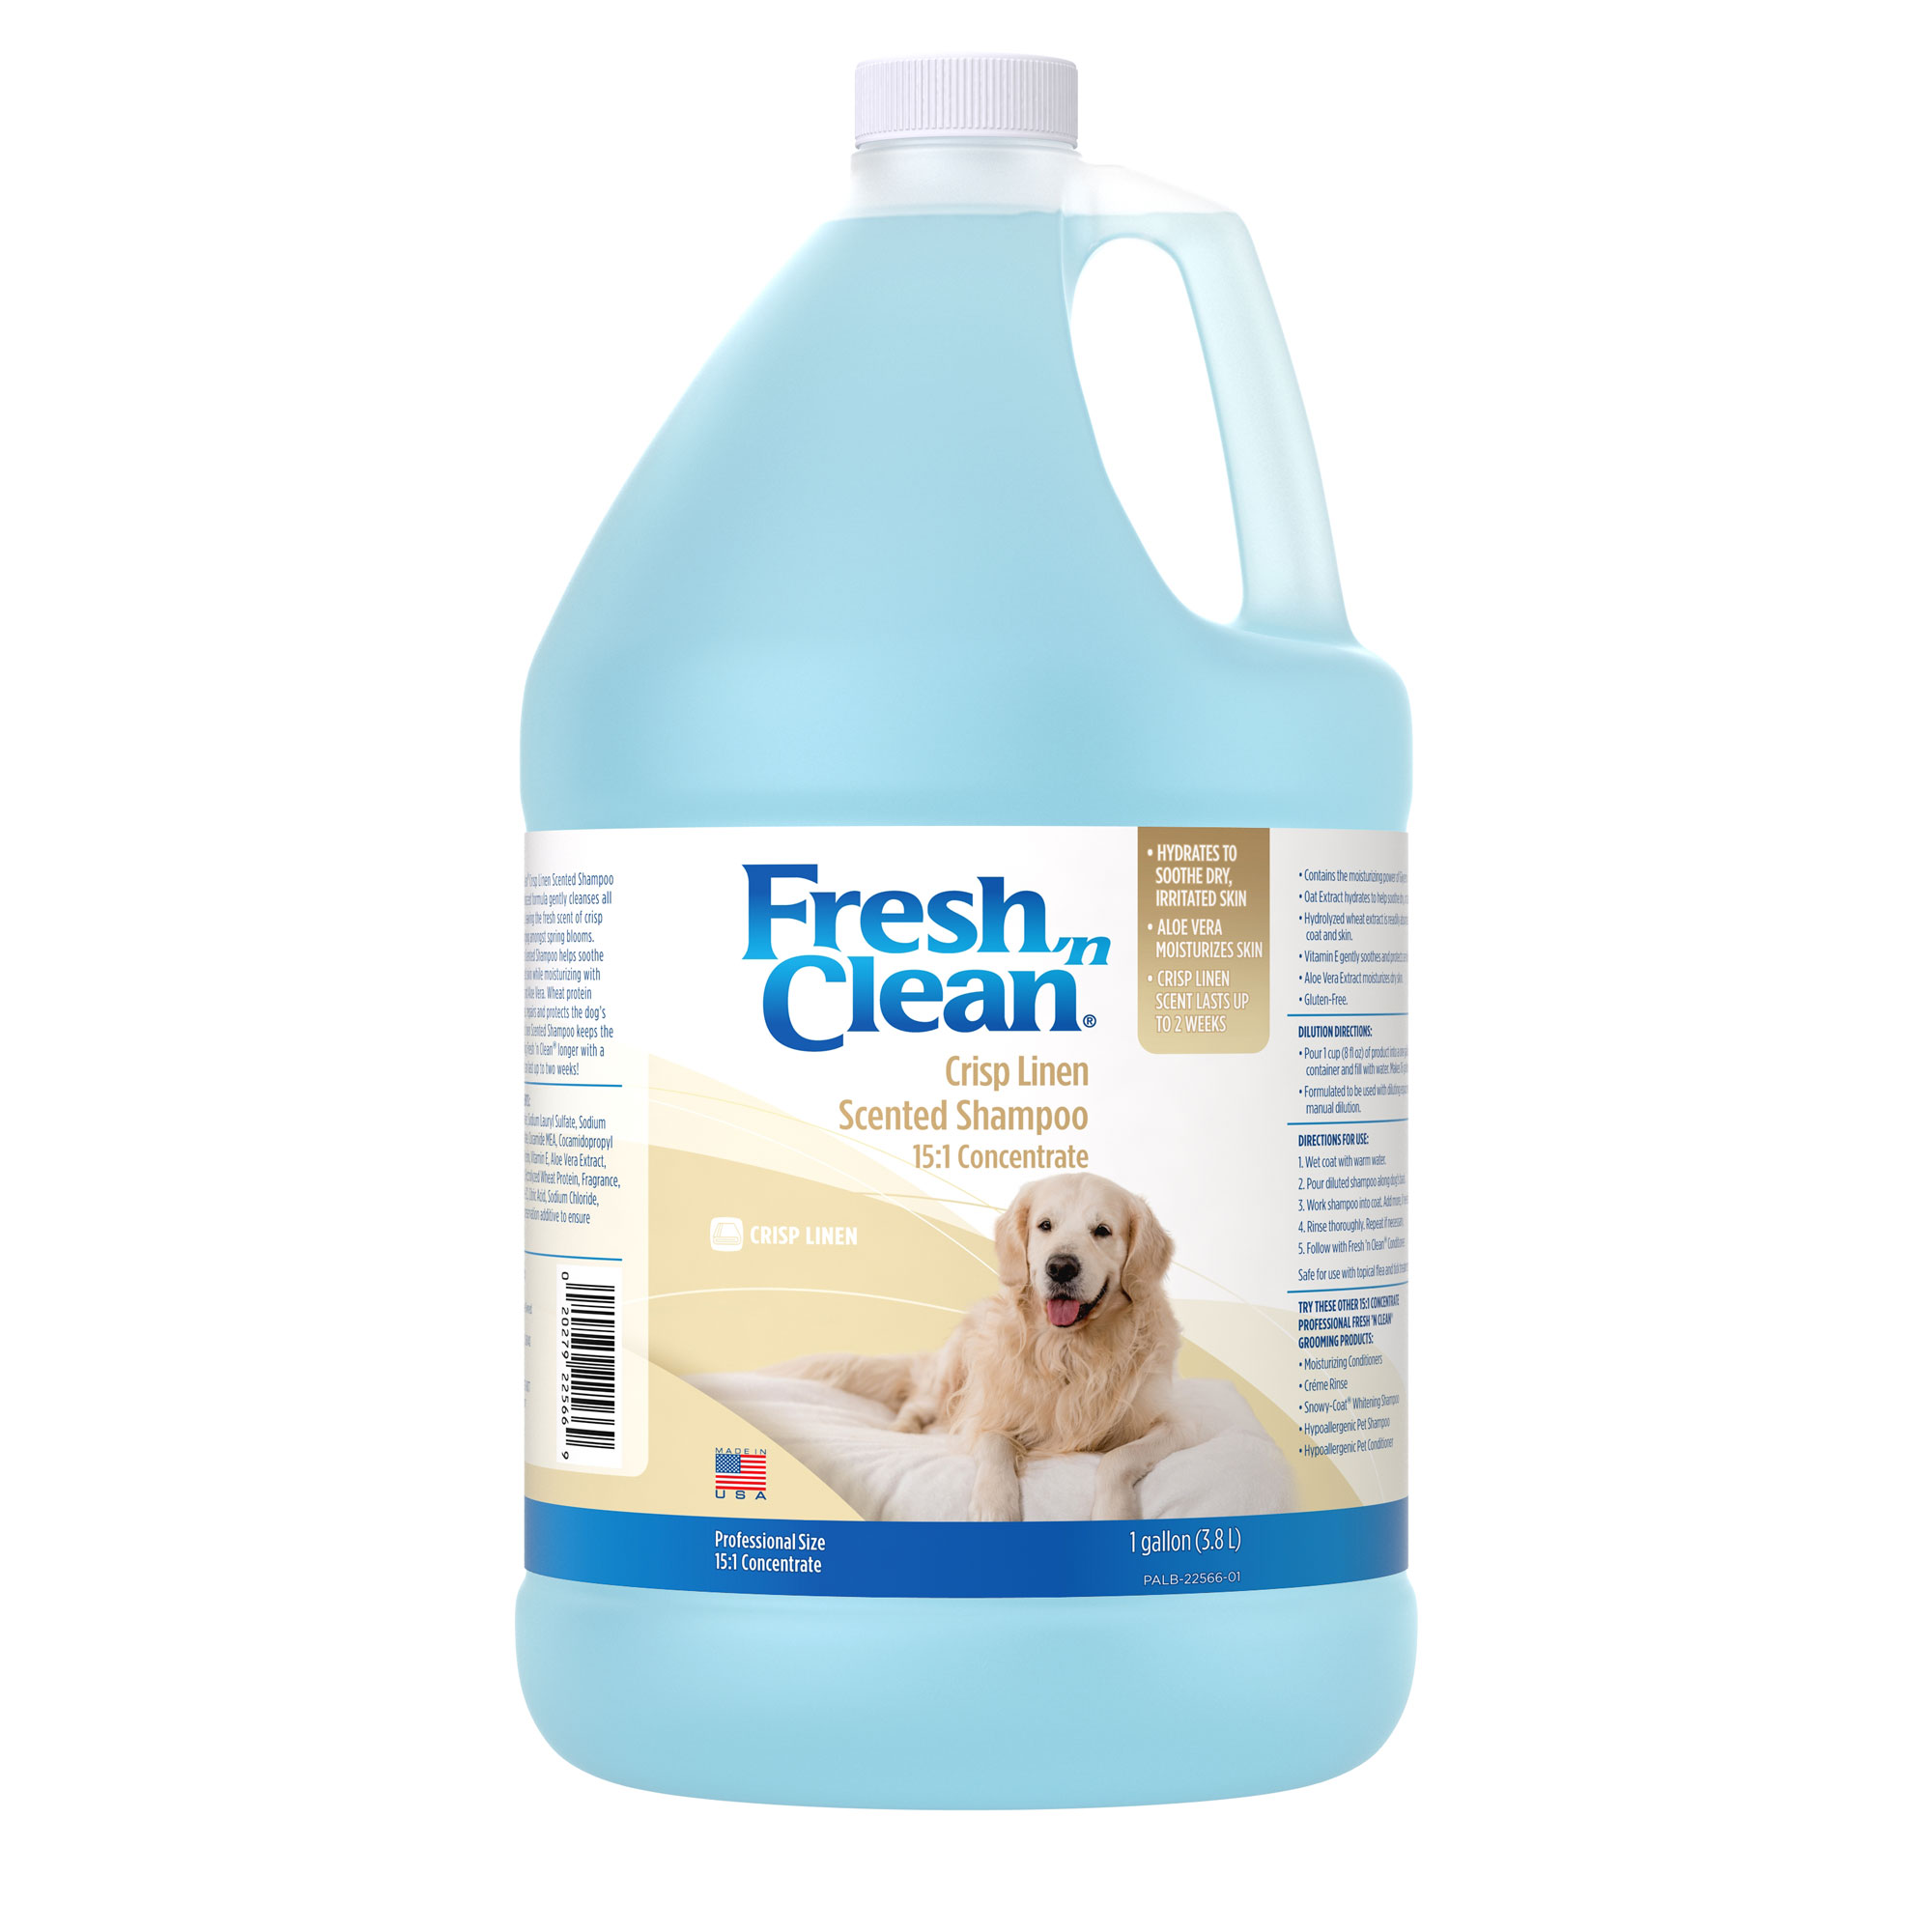 fresh 'n clean scented shampoo crisp linen scent 15:1 concentrate gallon